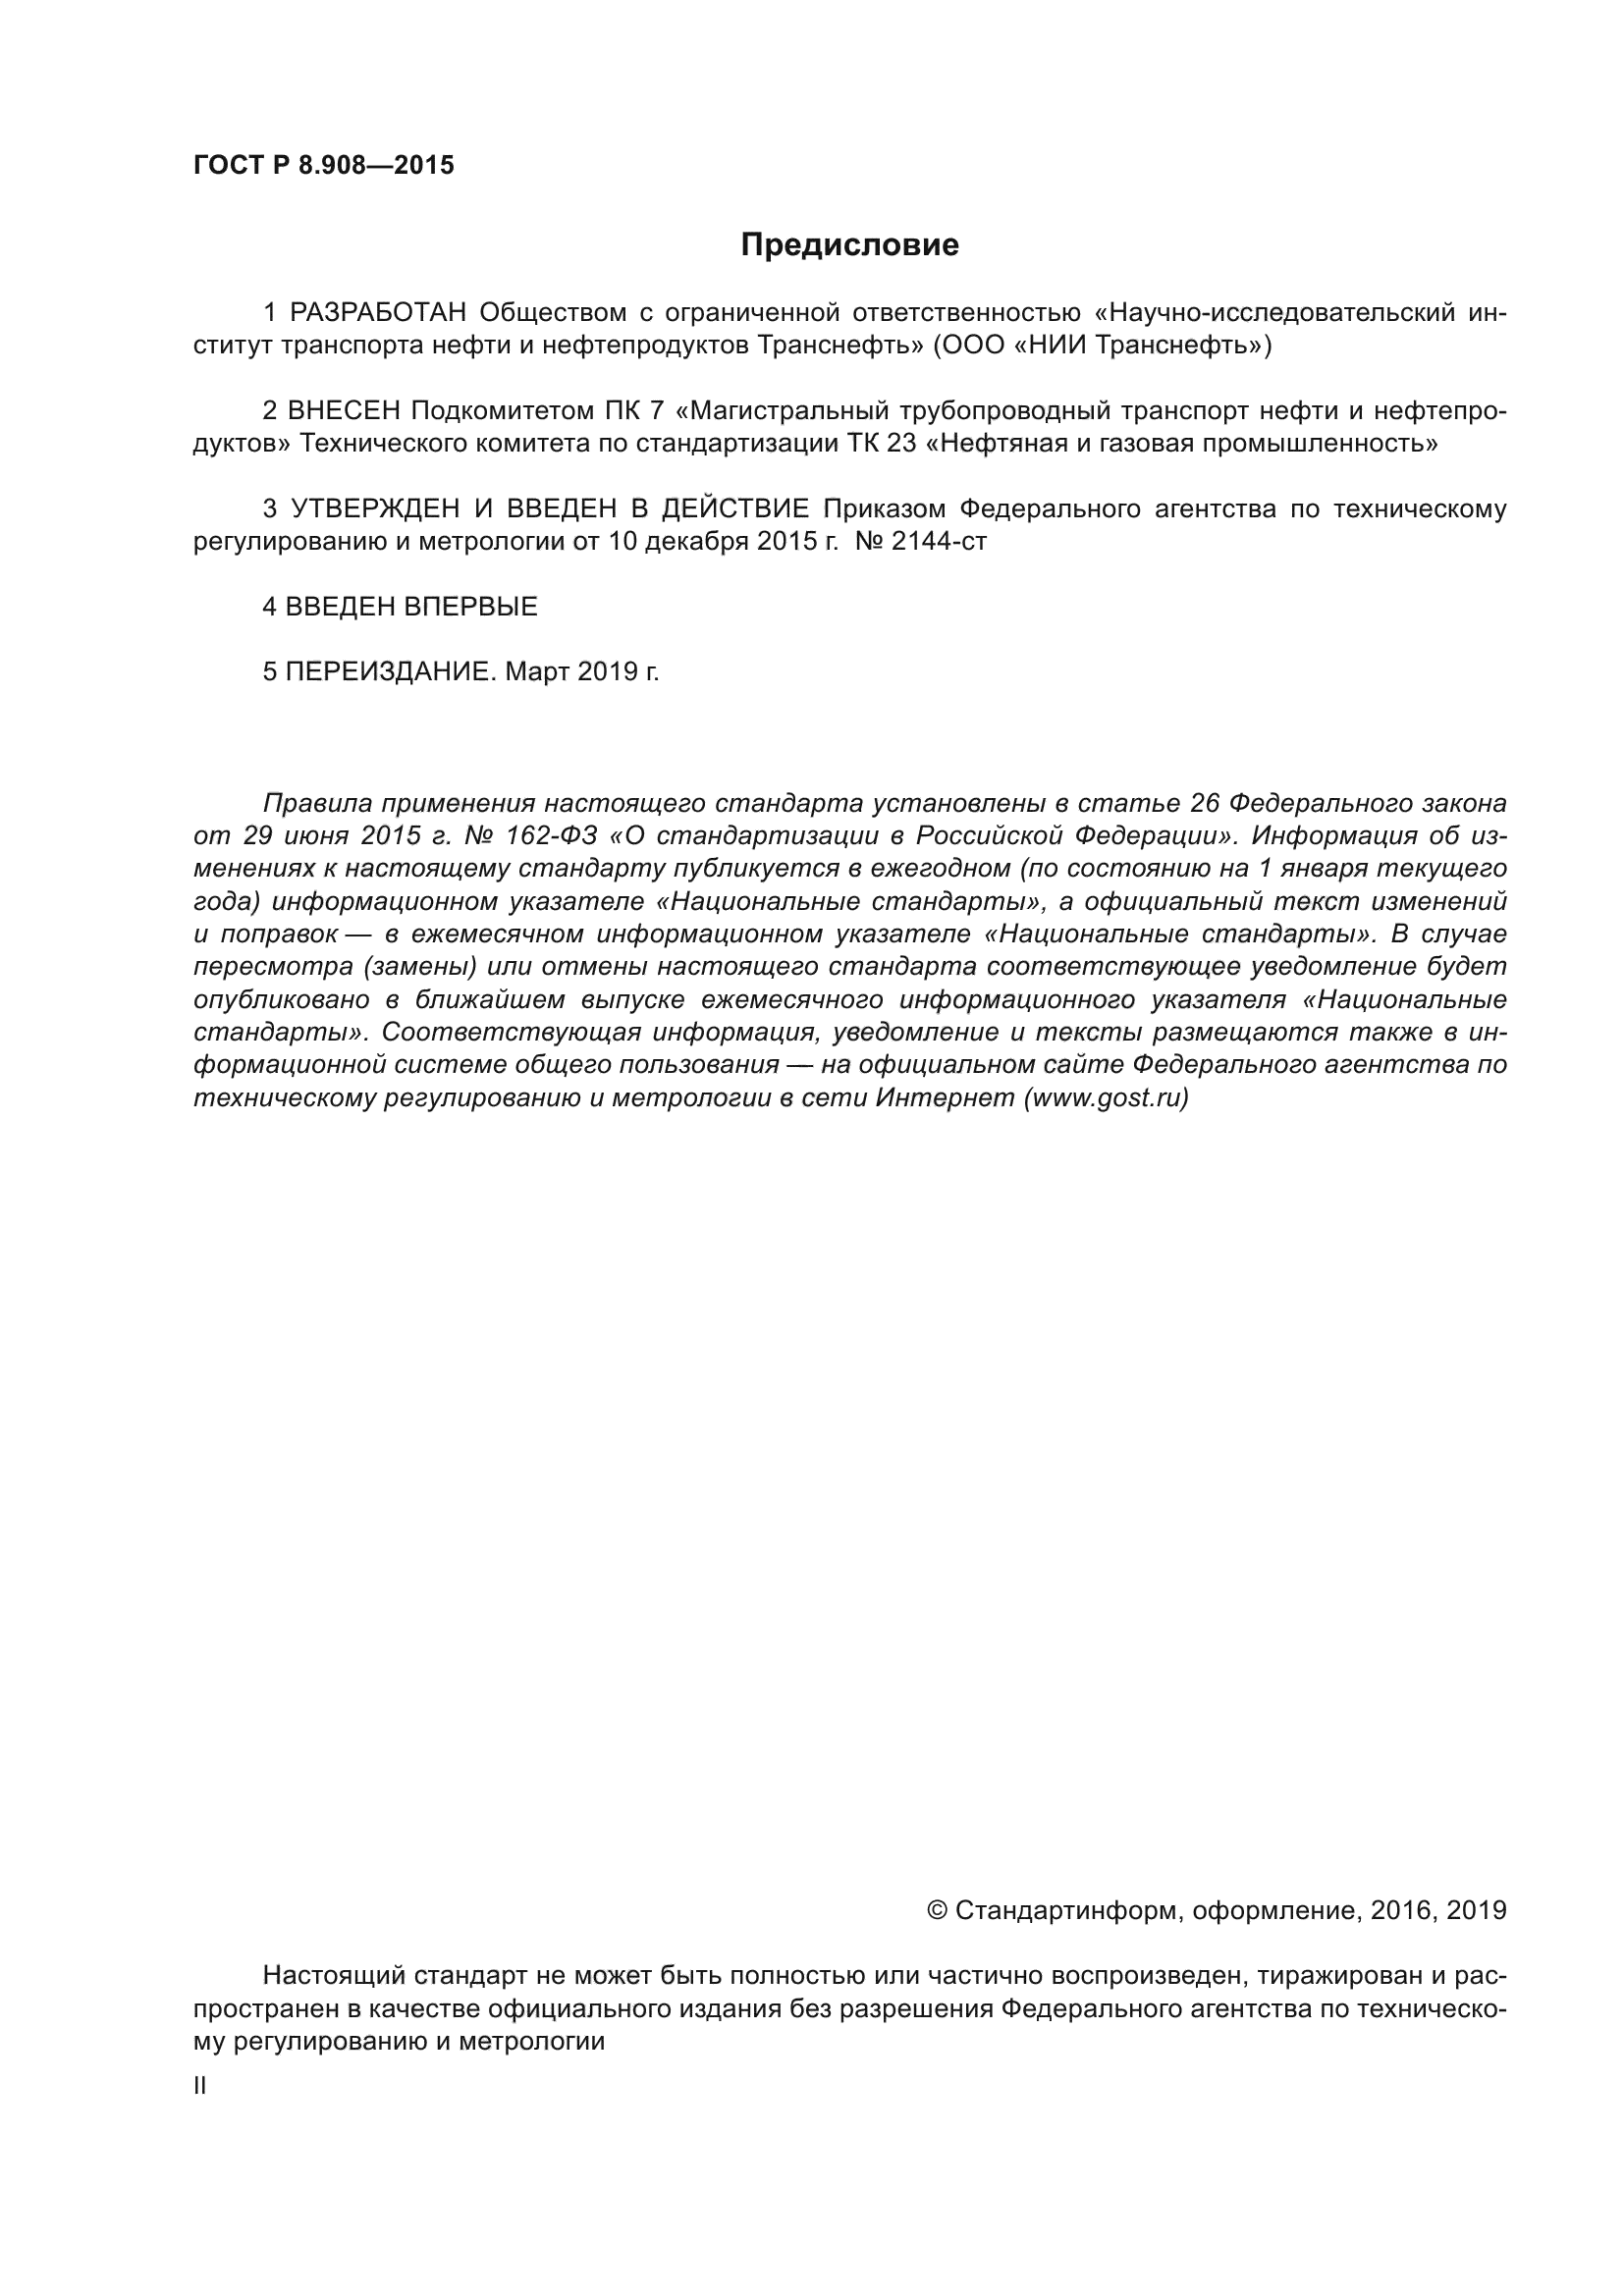 ГОСТ Р 8.908-2015